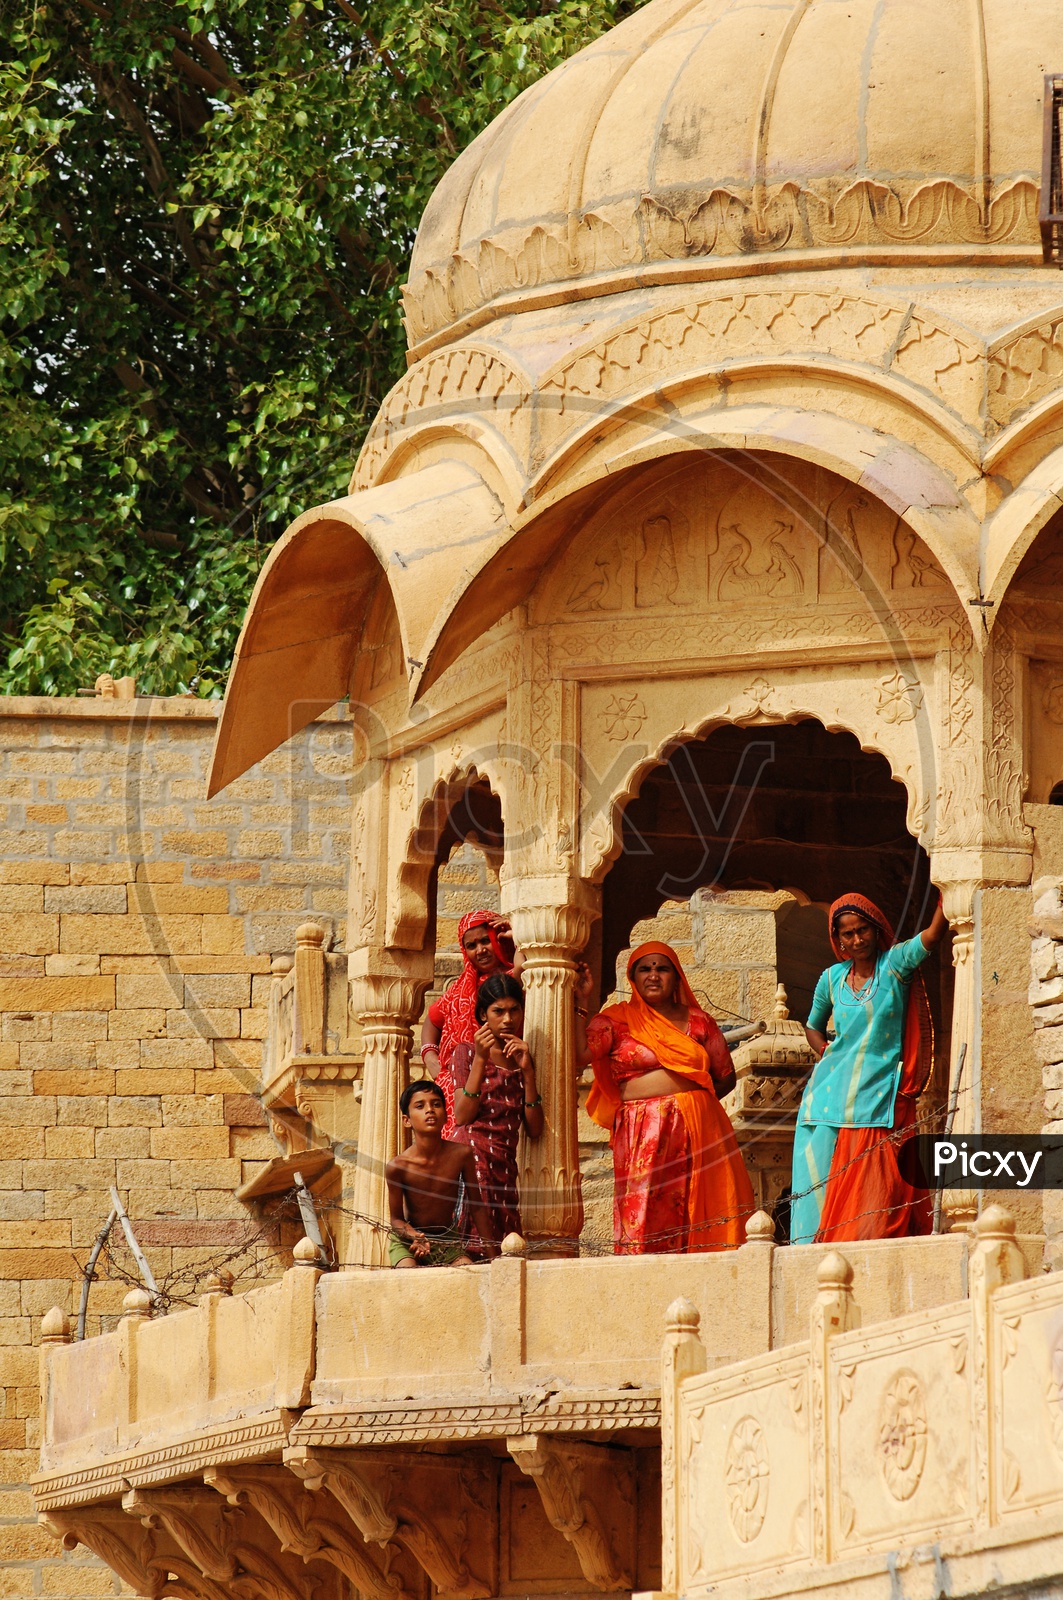 Rajasthani women standing alongside a dome